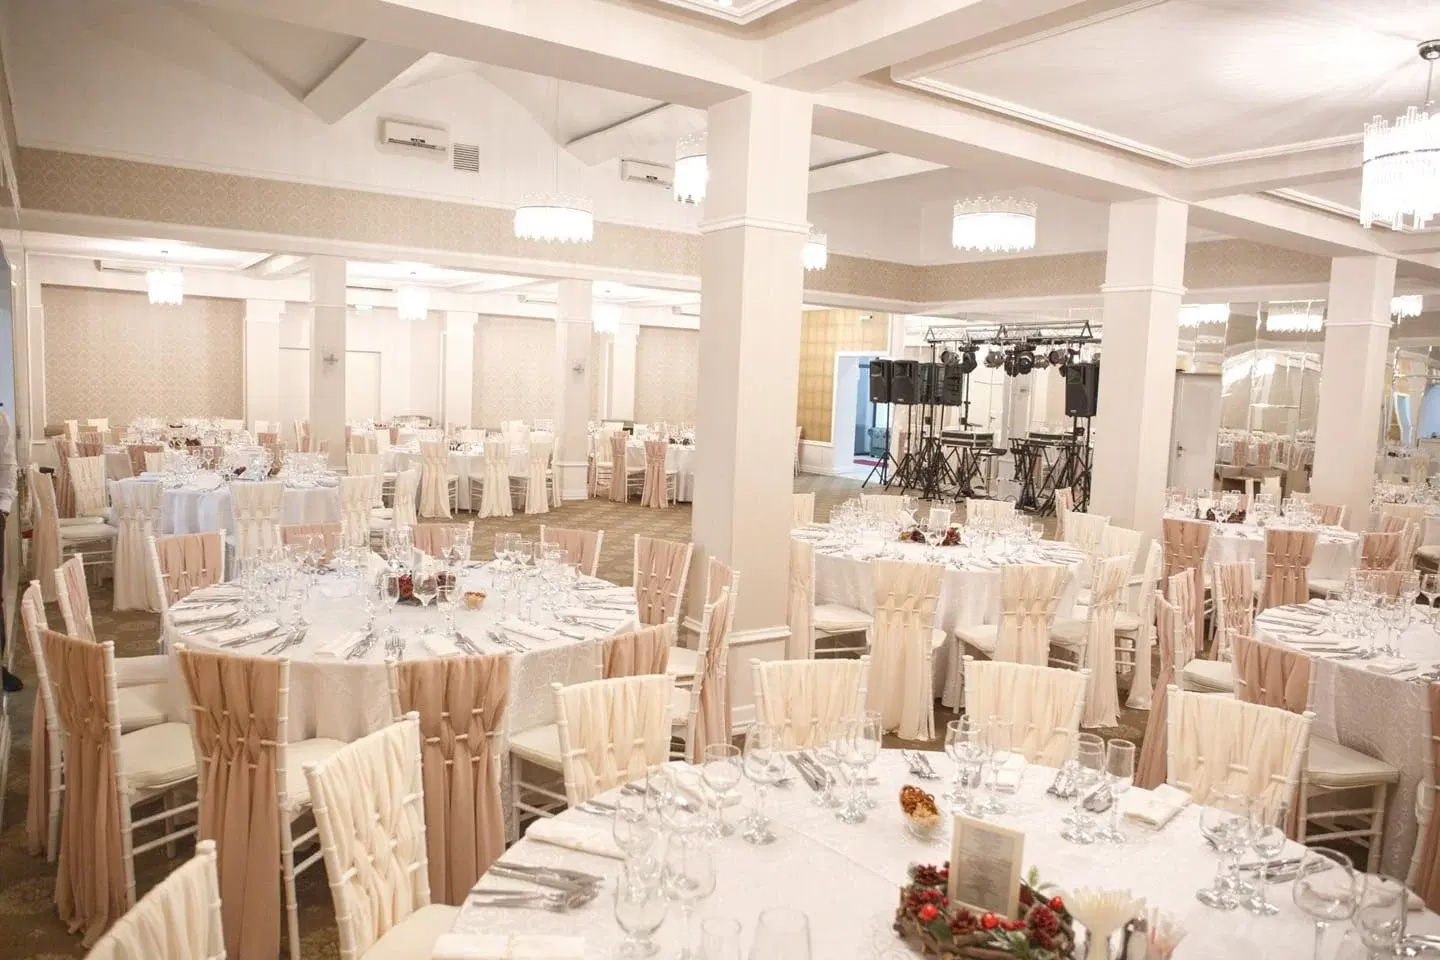 Celebration Ballroom - Restaurant and Events